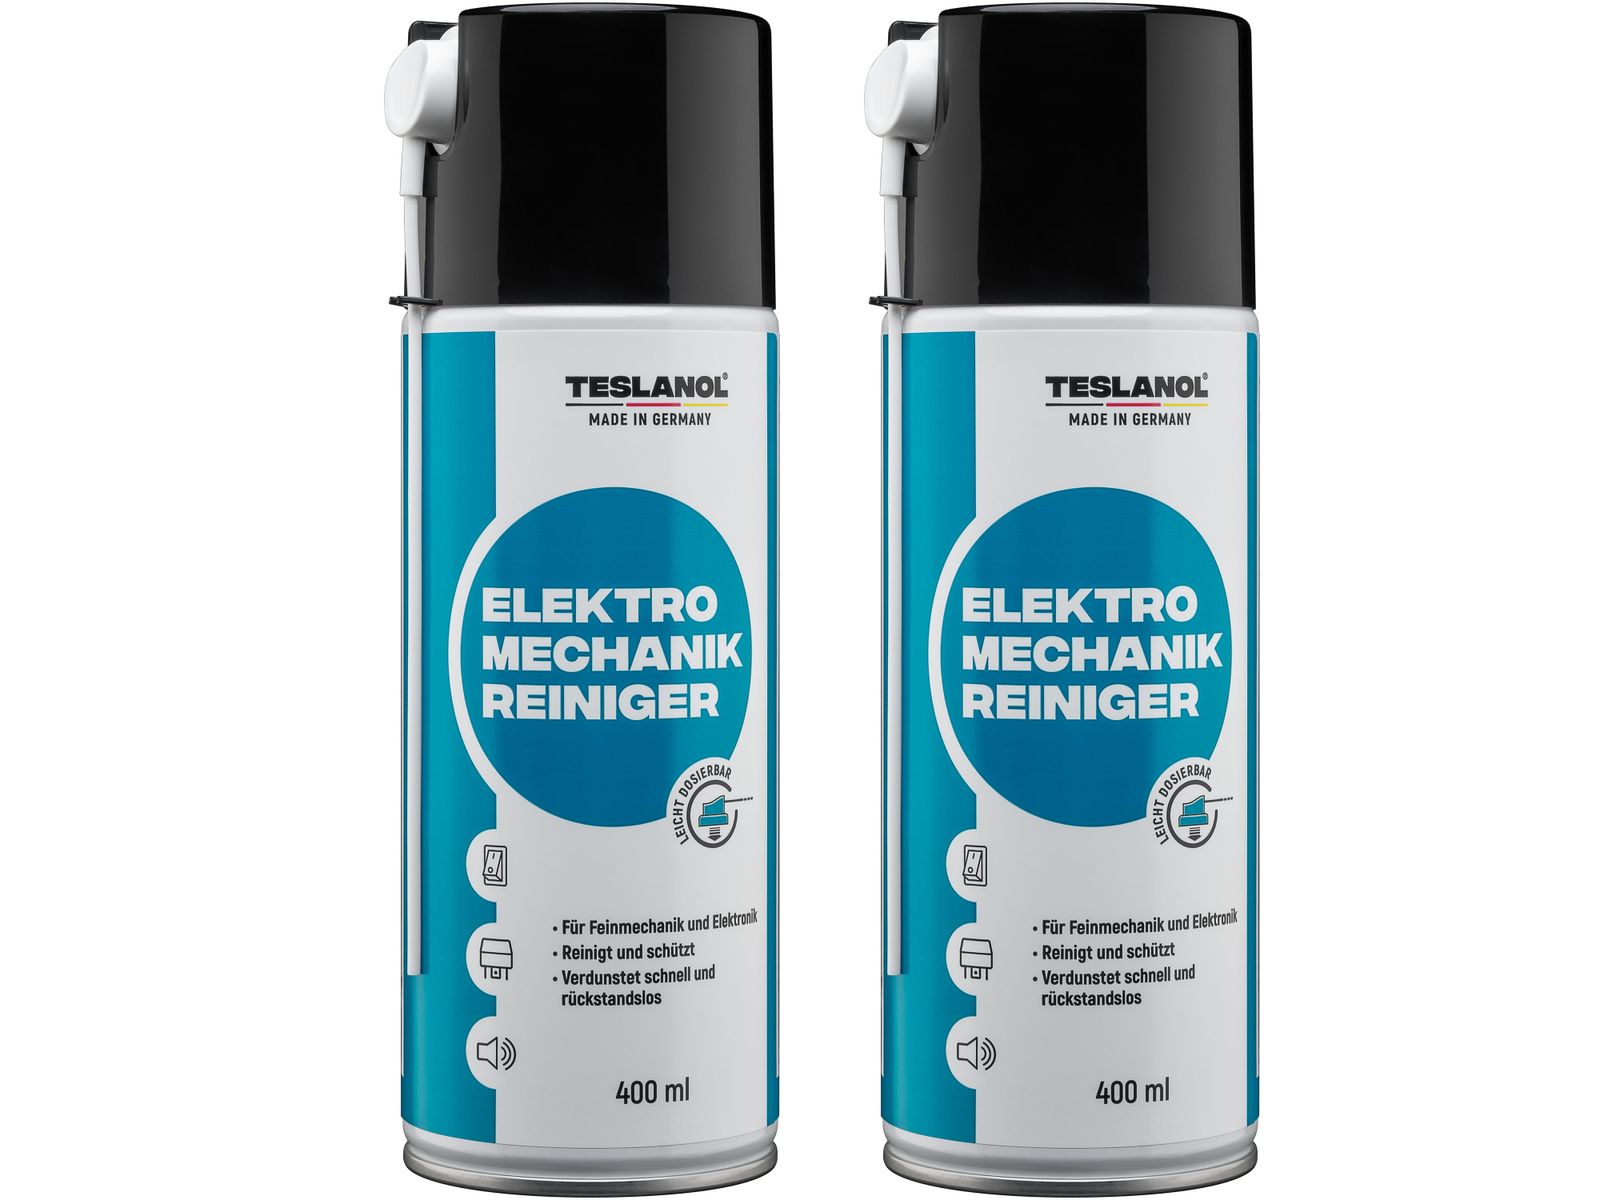 TESLANOL 26018 Elektro-Mechanik-Reinigerspray, 400 ml, 2 Stück von Teslanol